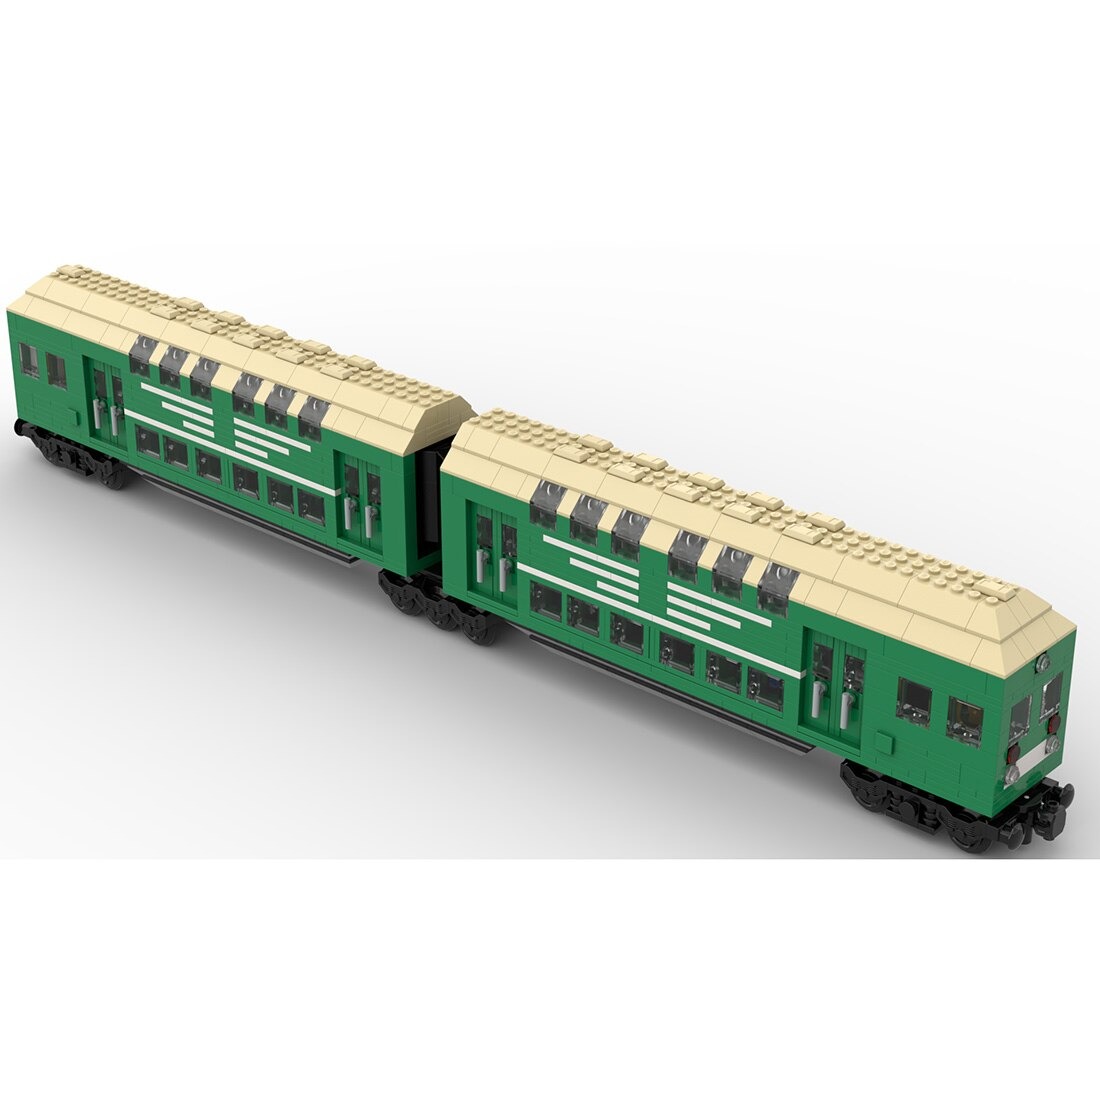 authorized moc 109281 7 axle train carri main 4 2 - ZHEGAO Block